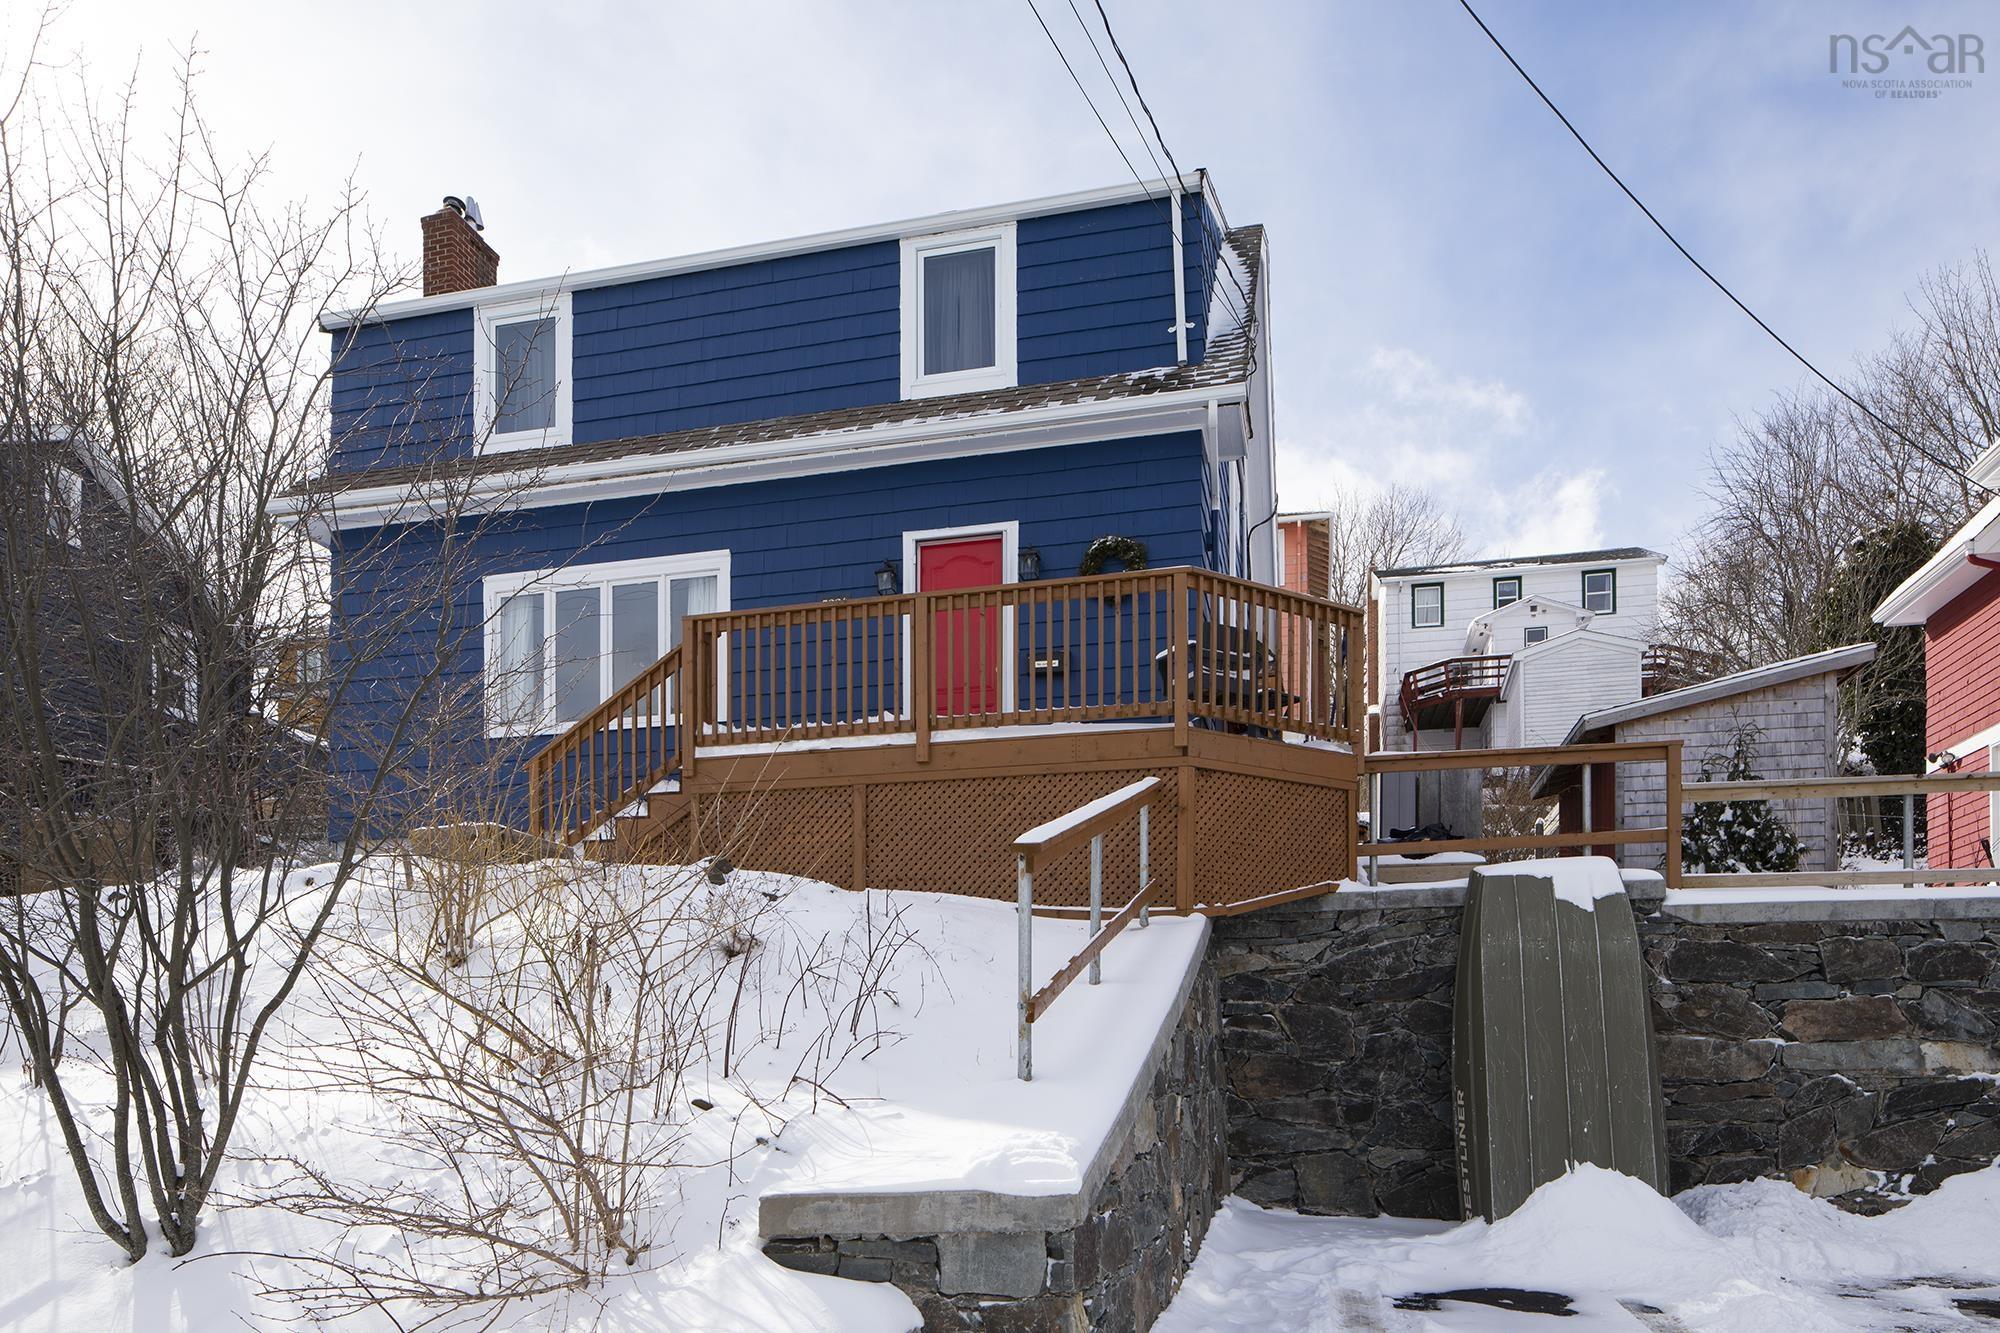 Nova Scotia Real Estate Blog- An second honest opinion.